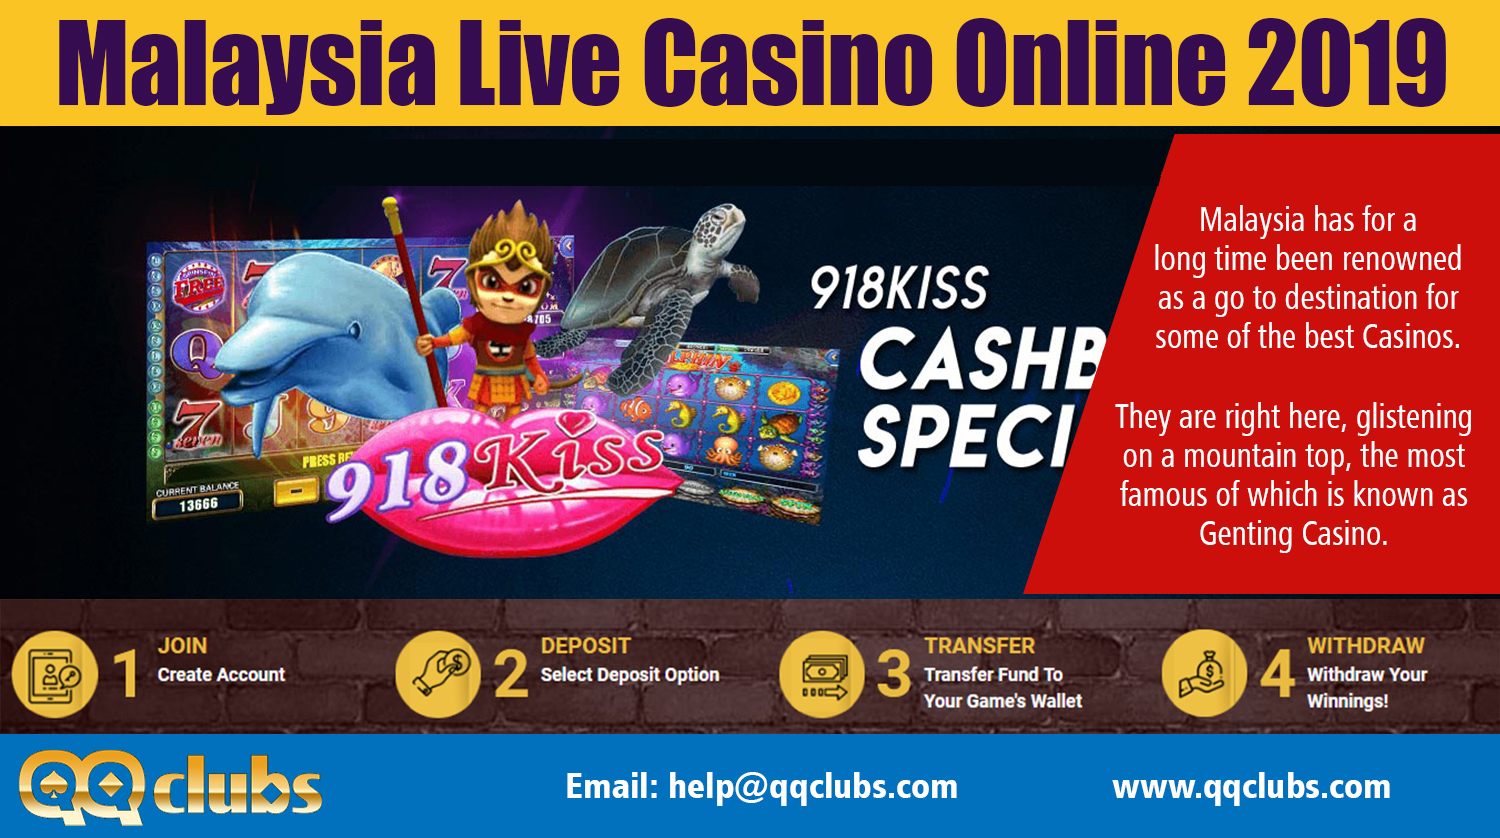 online casino malaysia free credit 2019 ipb